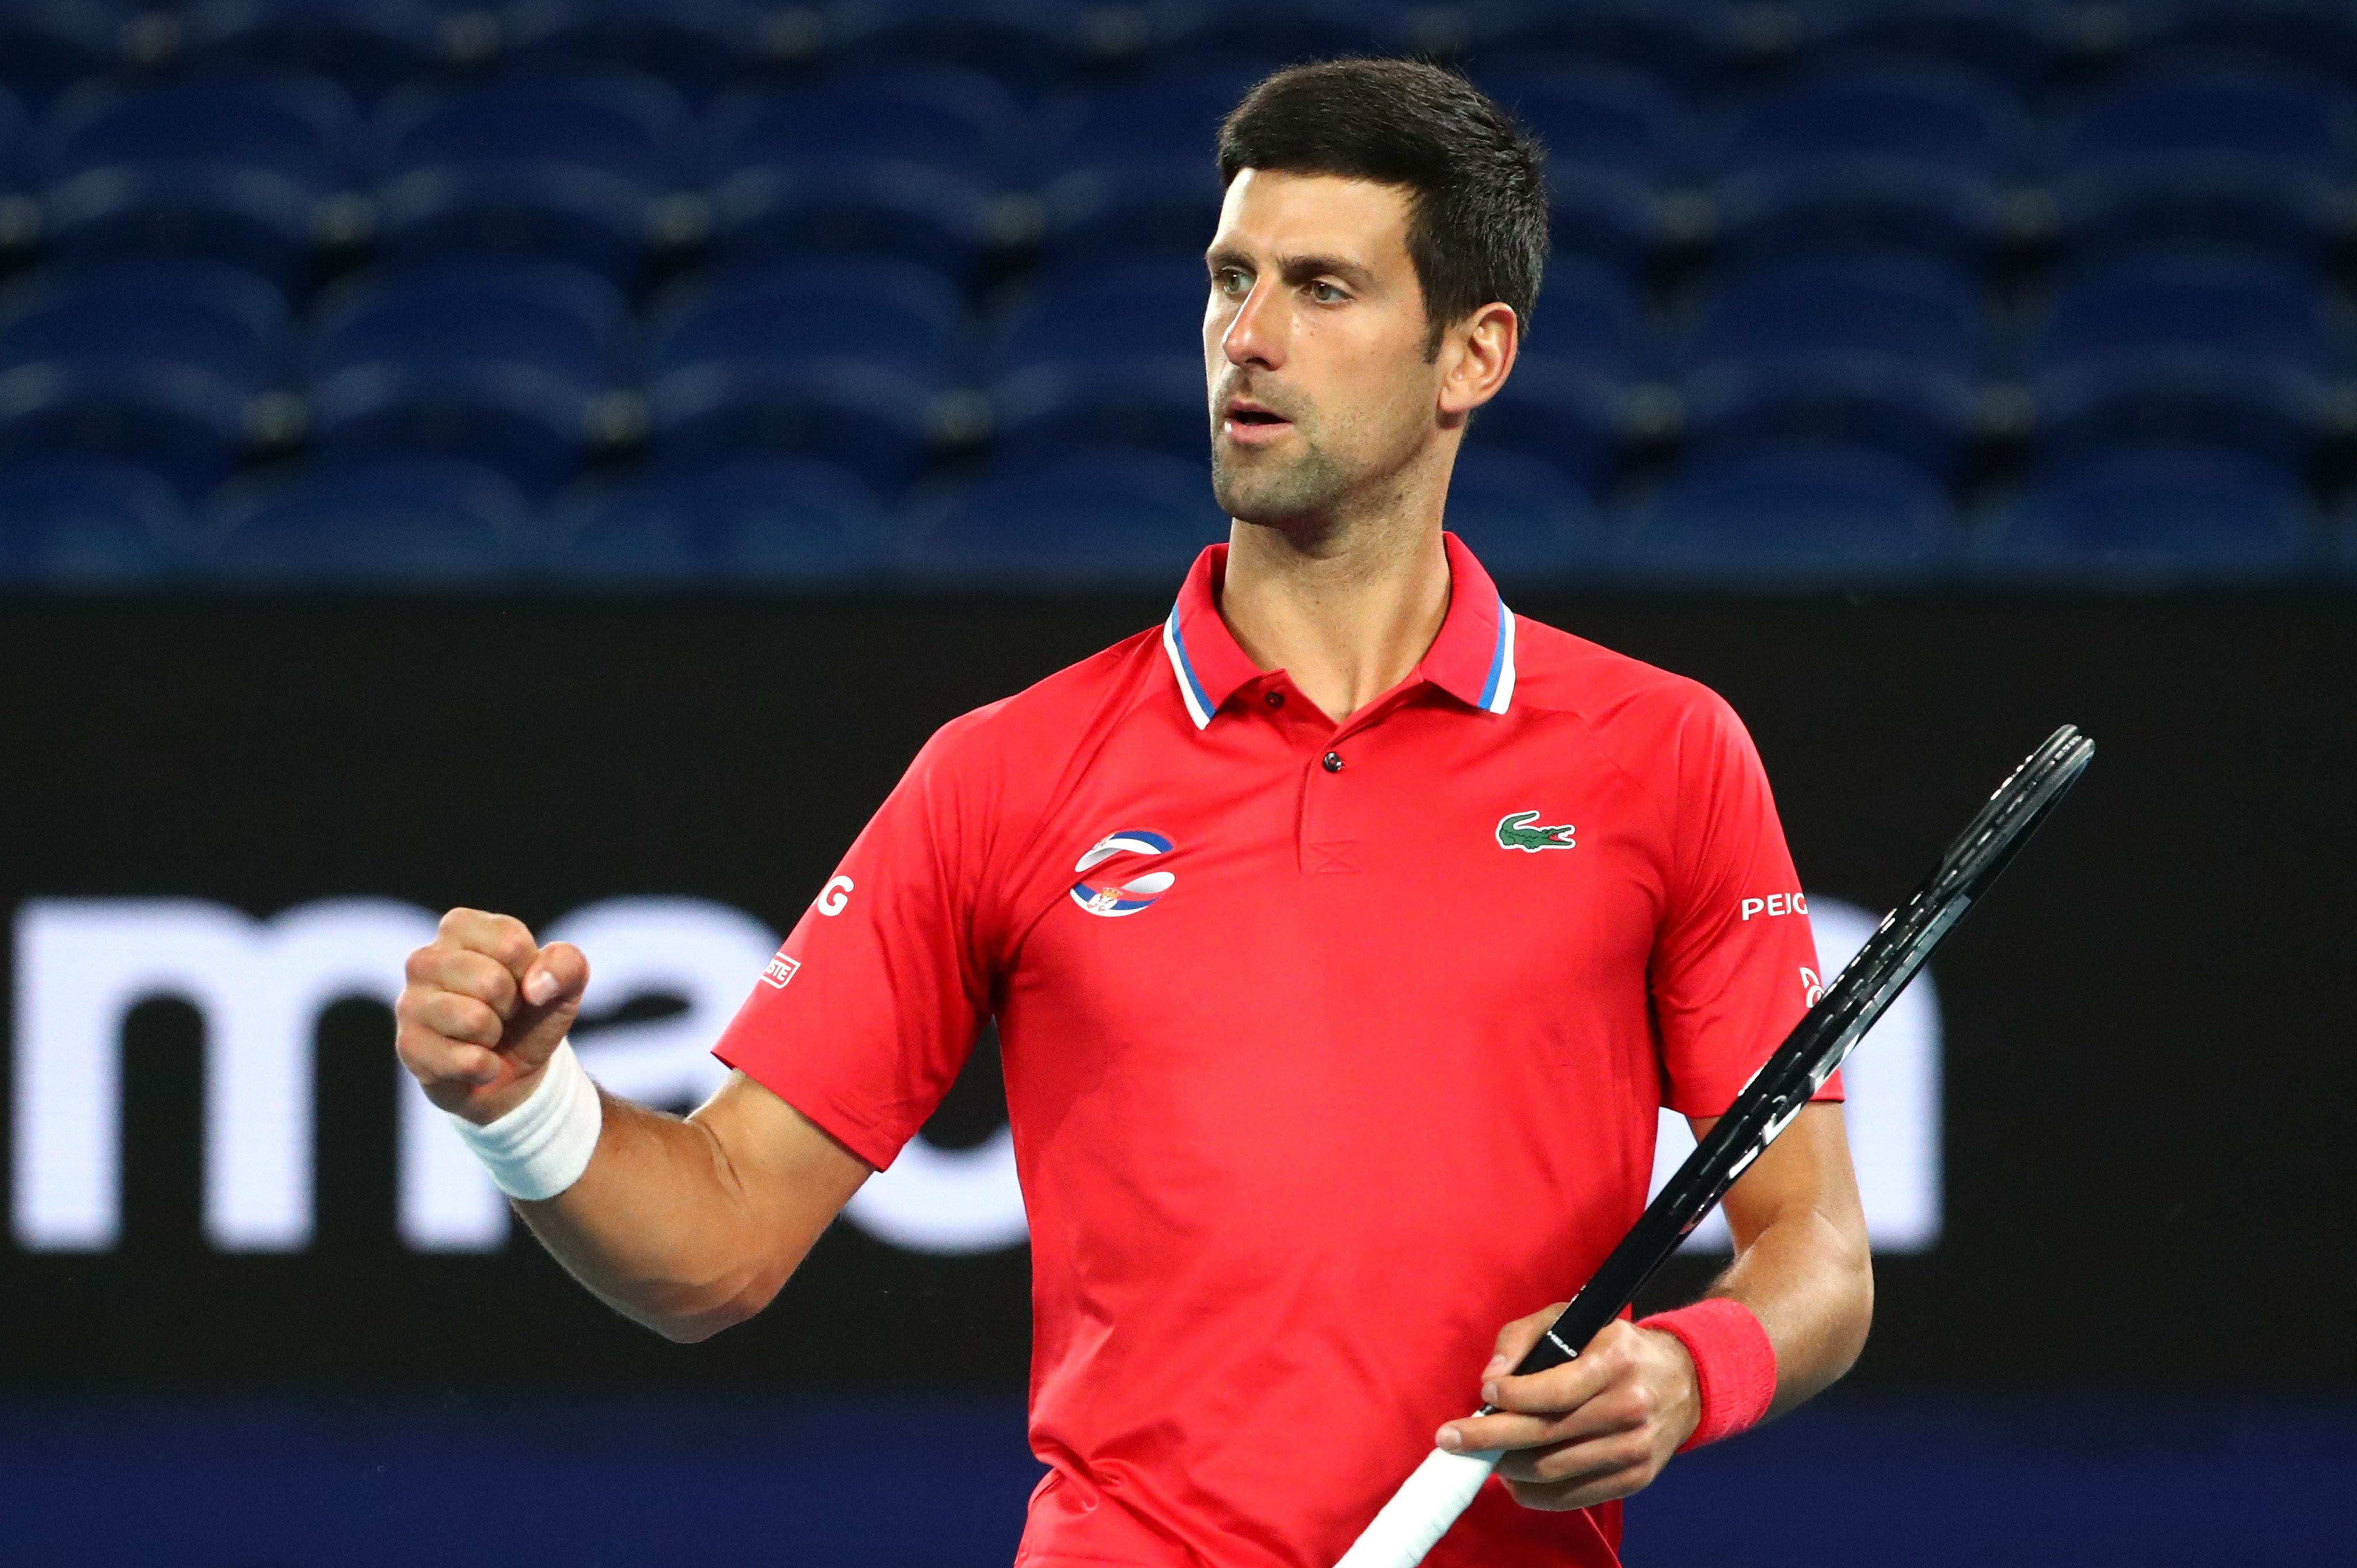 ‘His home place’: Djokovic still the Australian Open favorite